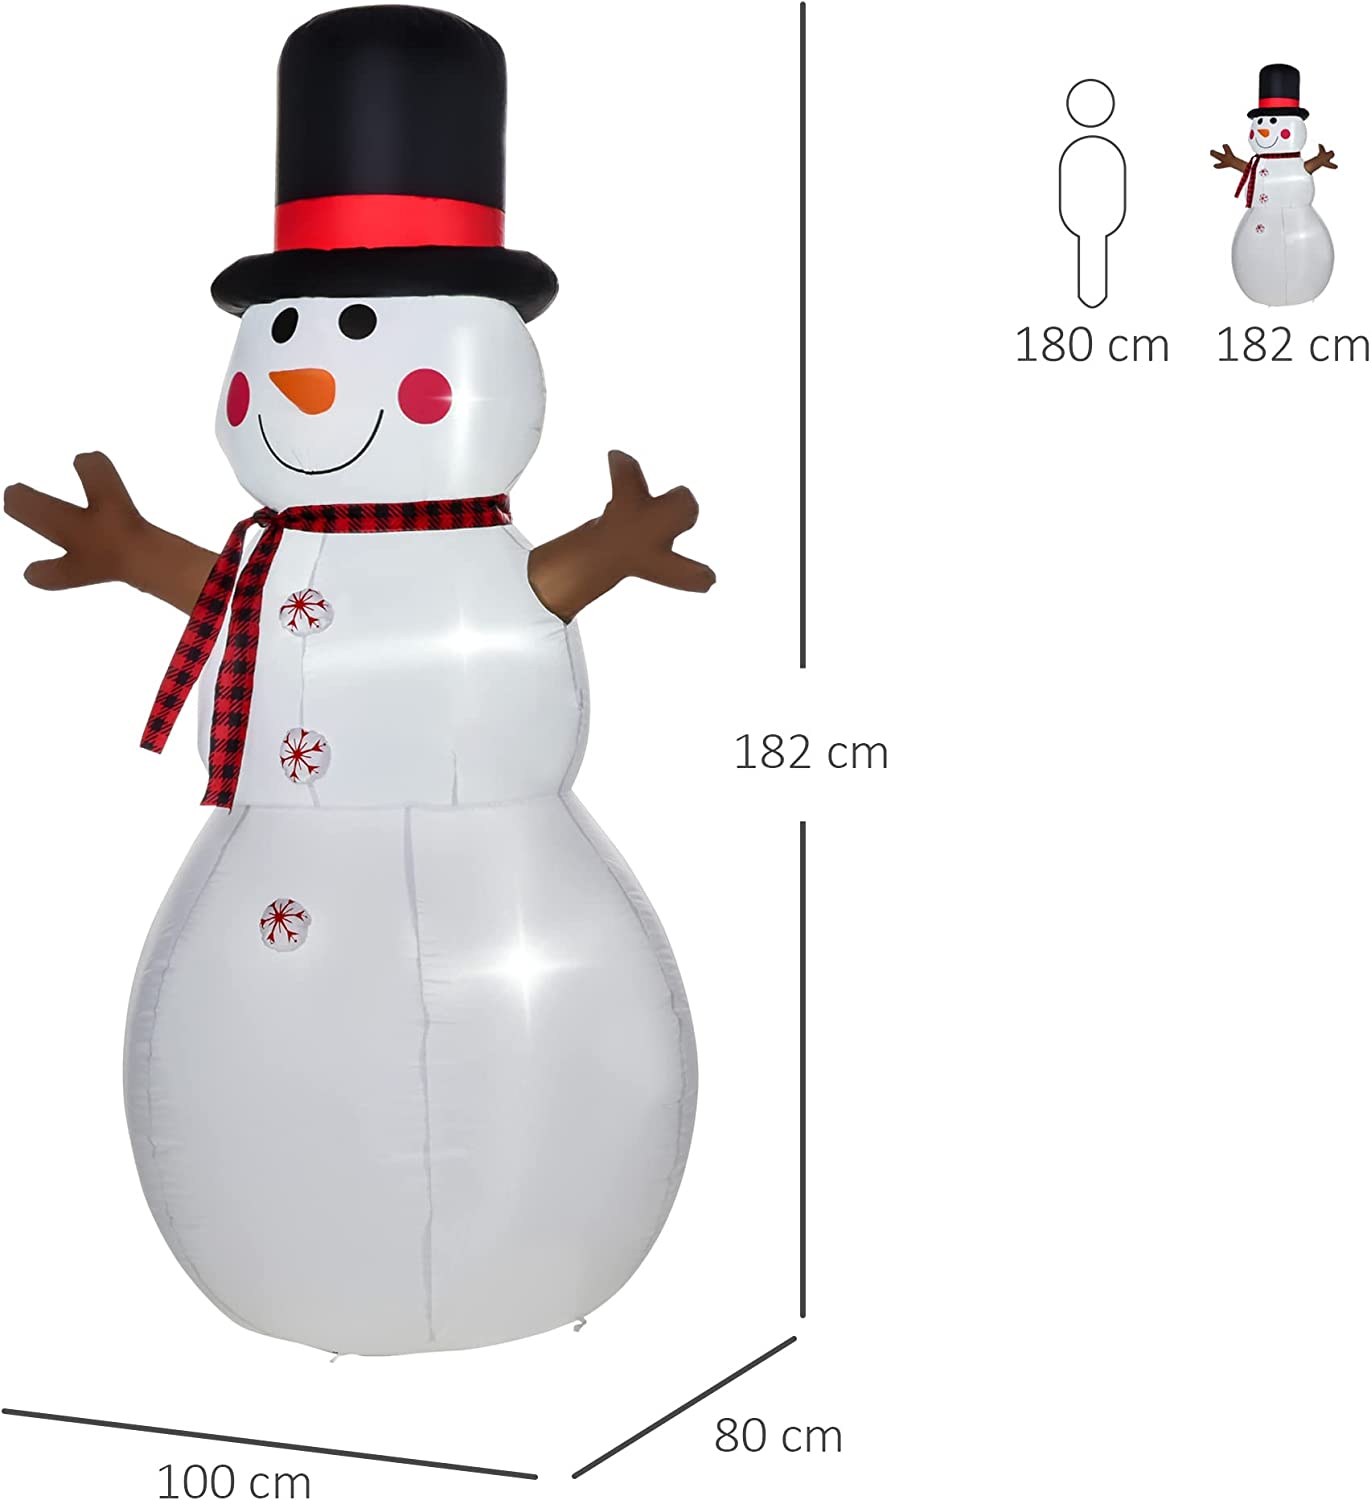 HOMCOM 6ft Giant LED Inflatable Snowman Christmas Outdoor Decoration - maplin.co.uk